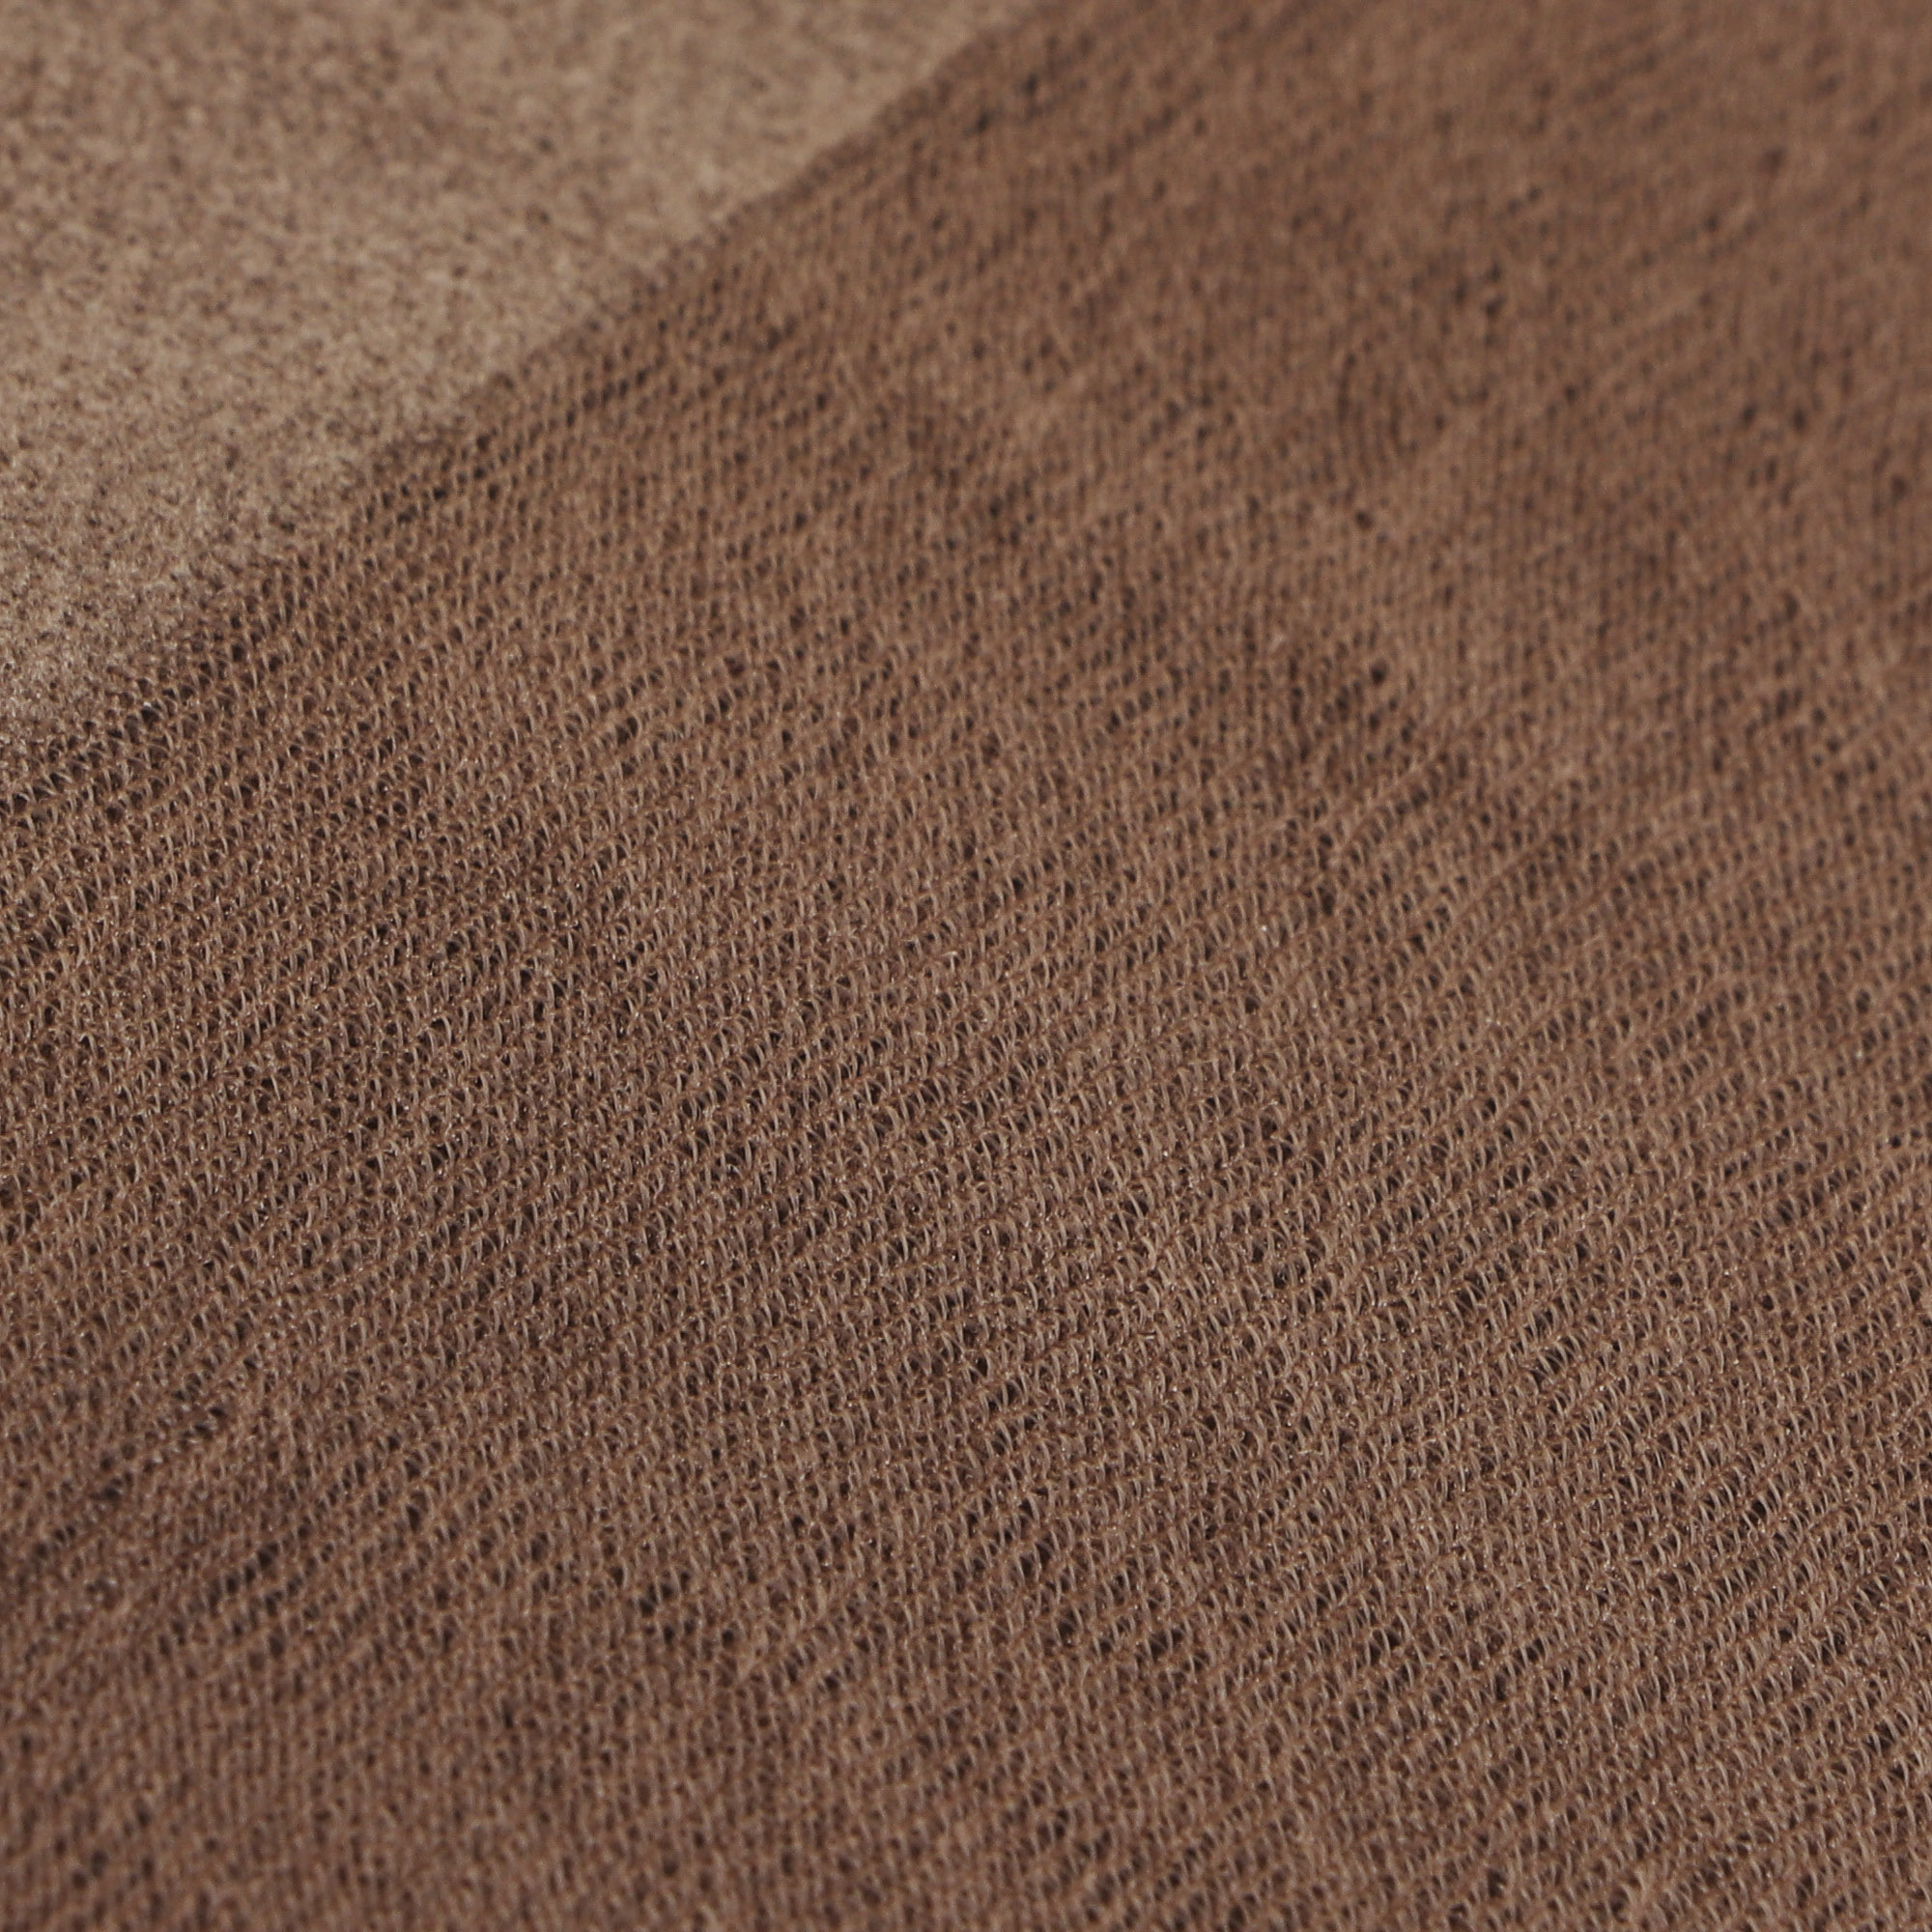 Колготки Sanpellegrino Comodo 15 Daino  S/M, цвет коричневый, размер 1/2 - фото 2